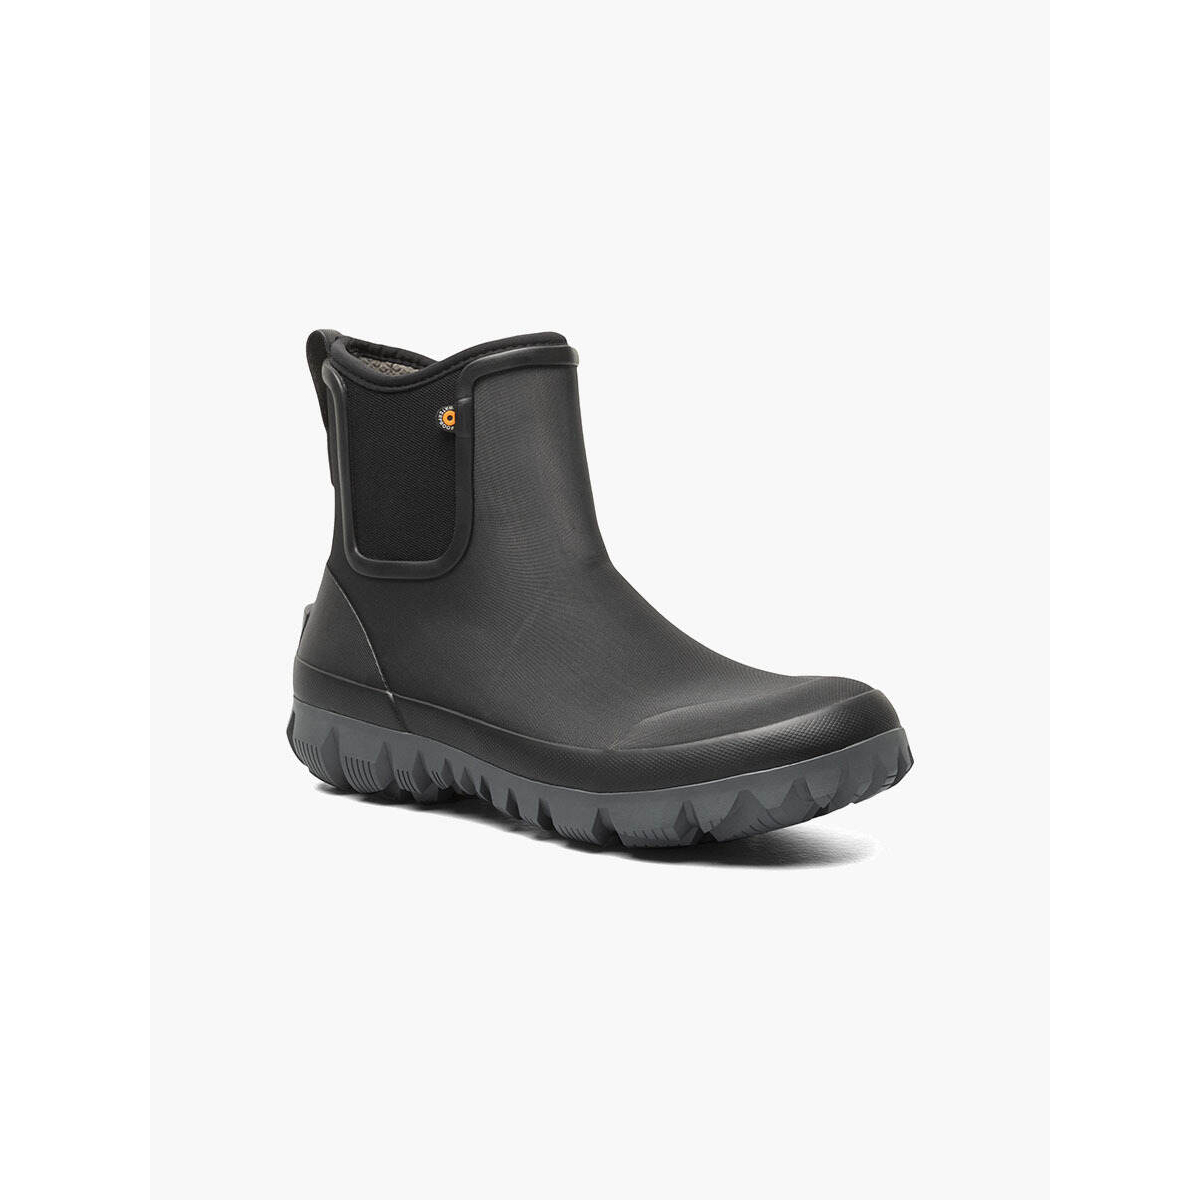 BOGS Men's Acrata Urban Chelsea Winter Boots Black - 72910-001 BLACK - BLACK, 13